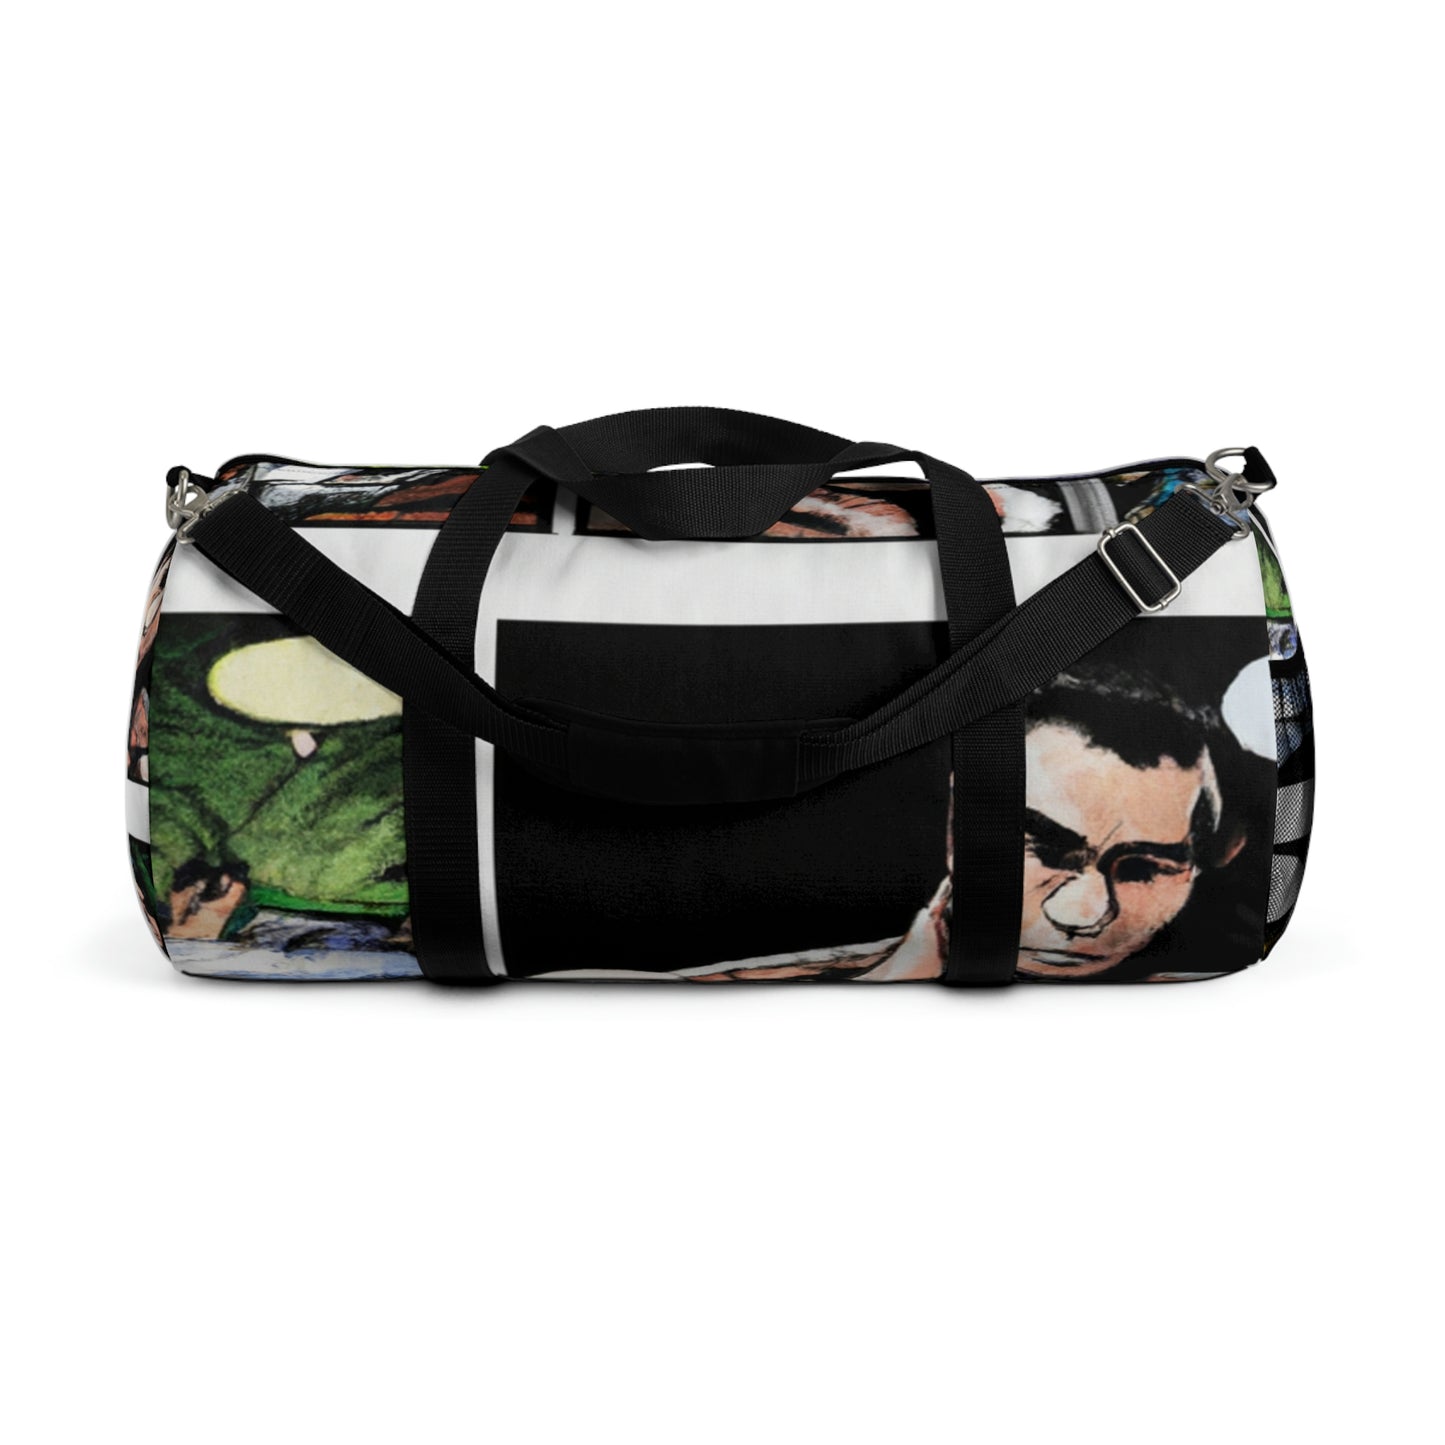 Reginald Rousseau Luxury Luggage - Comic Book Duffel Bag